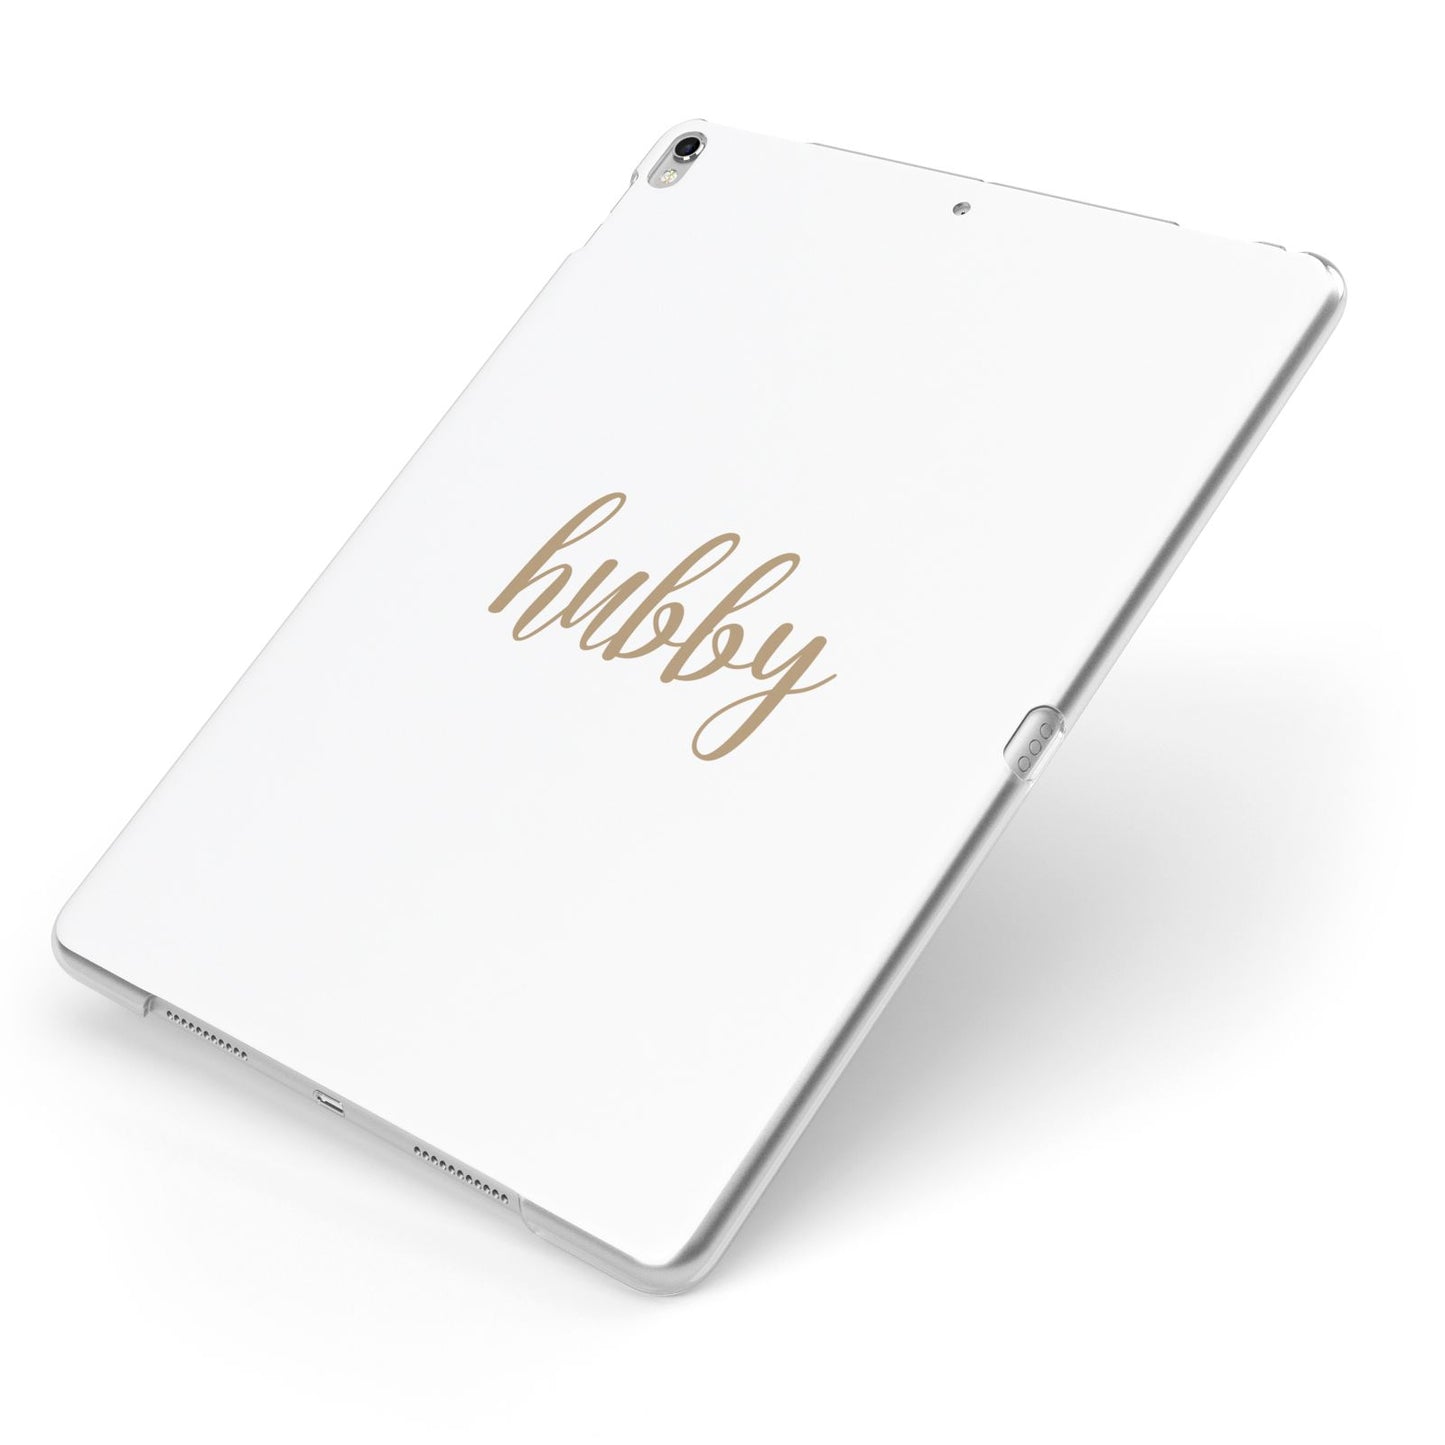 Hubby Apple iPad Case on Silver iPad Side View